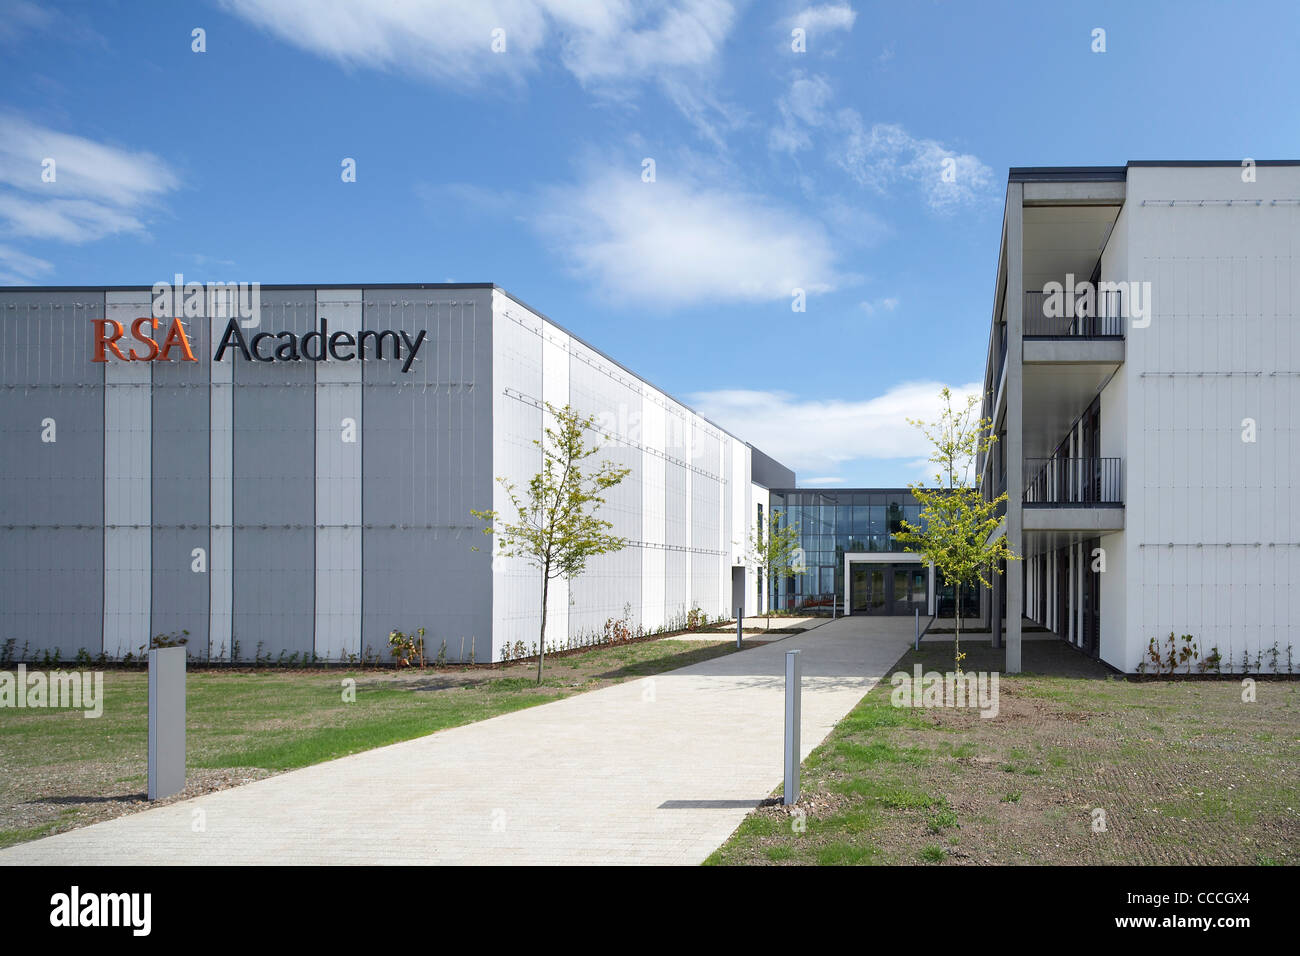 Rsa Academy, Tipton, United Kingdom, 2010 Stock Photo